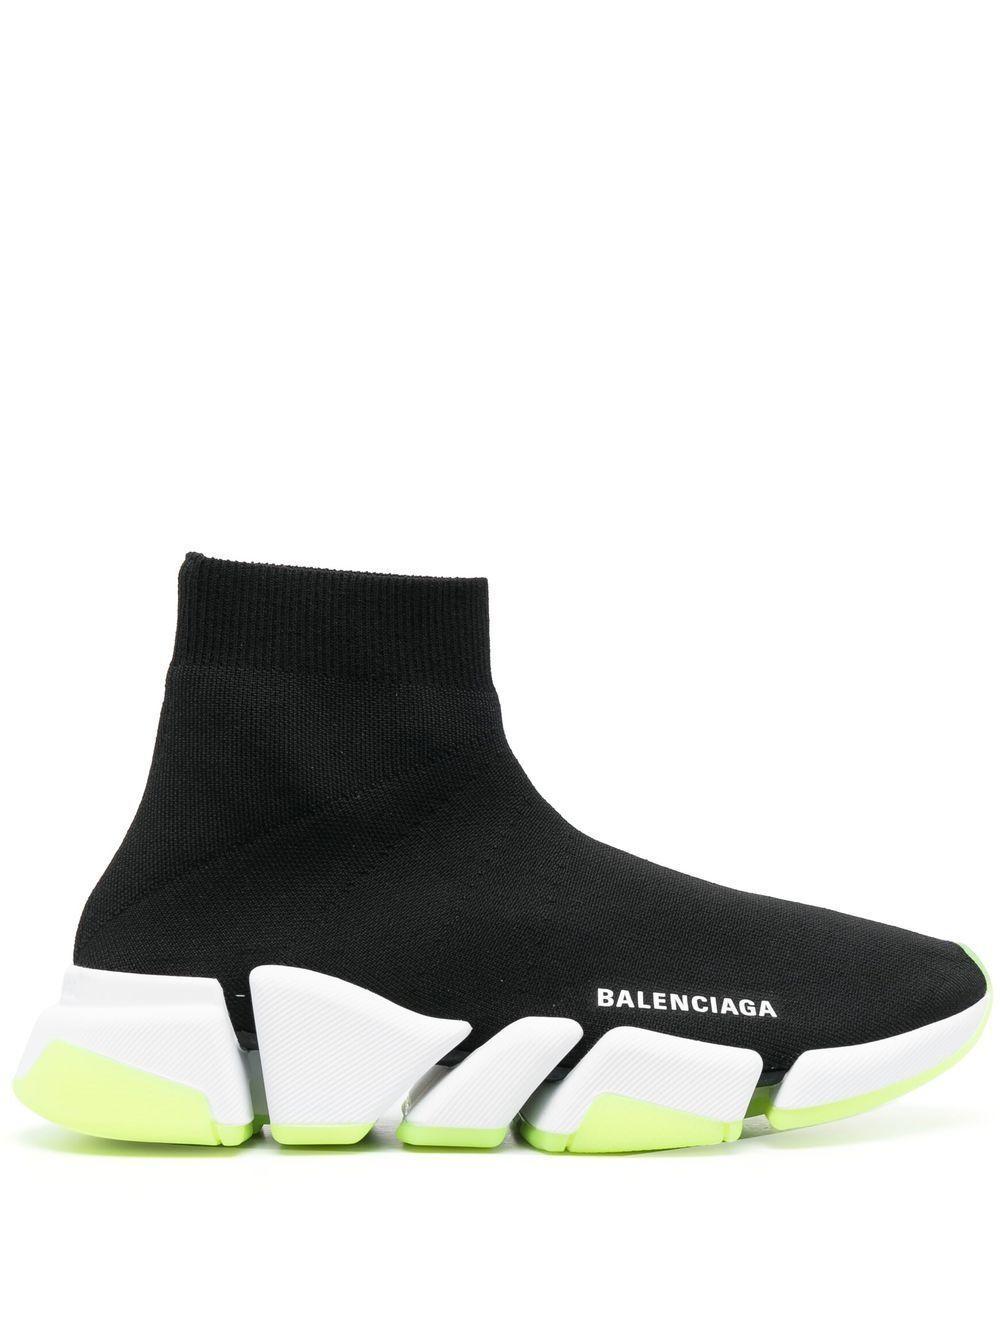 Balenciaga Speed 2.0 Sneakers in Black | Lyst